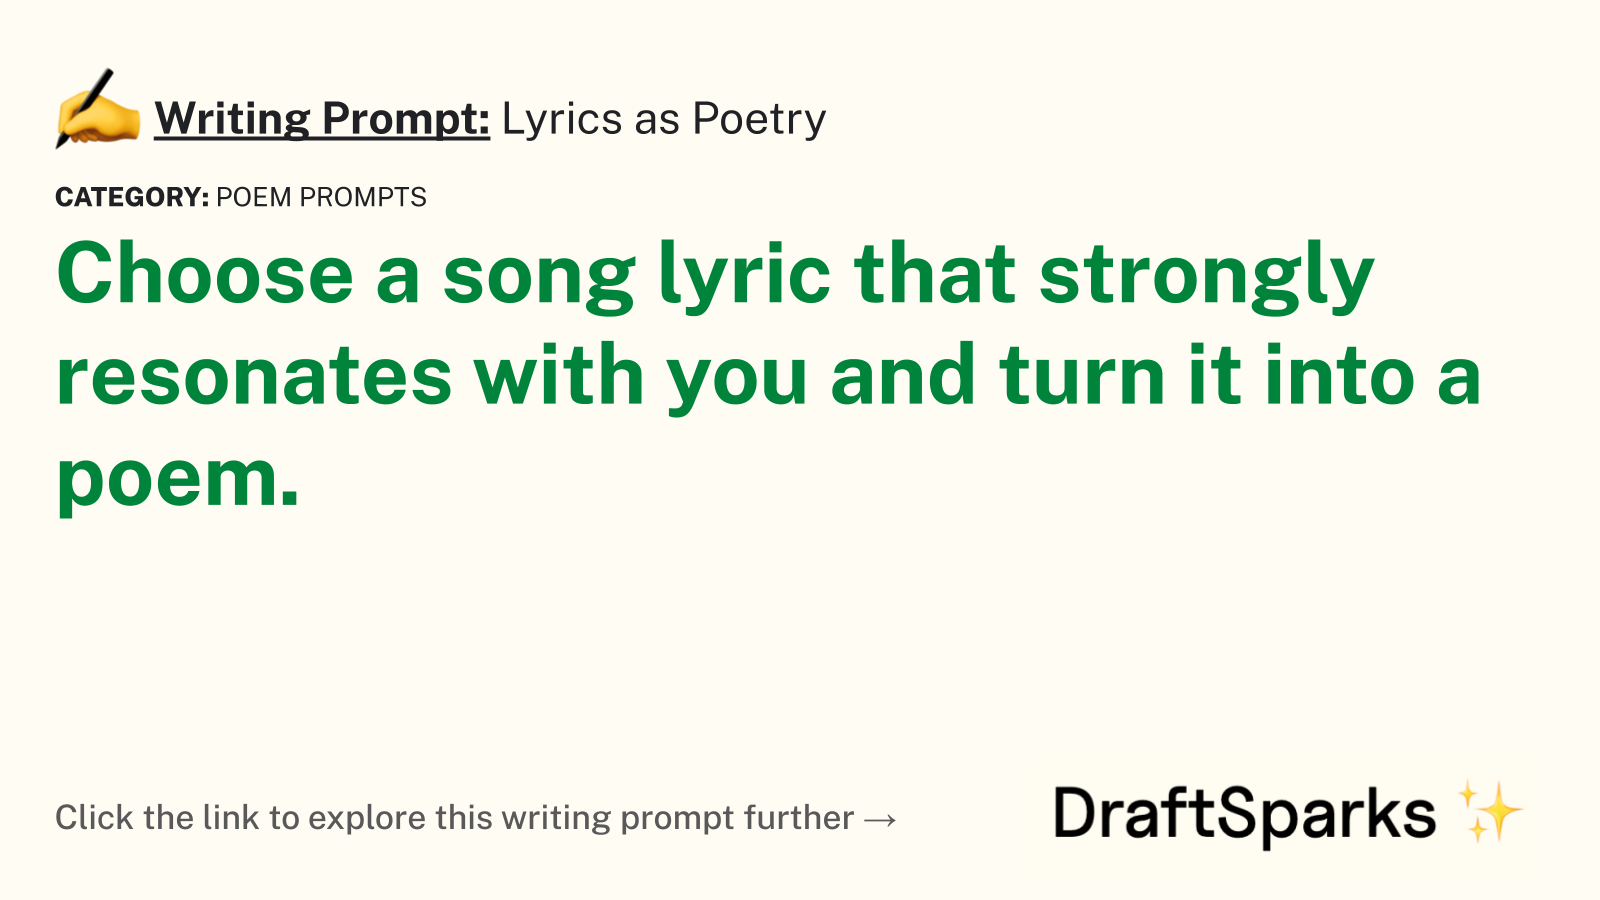 Lyrics as Poetry